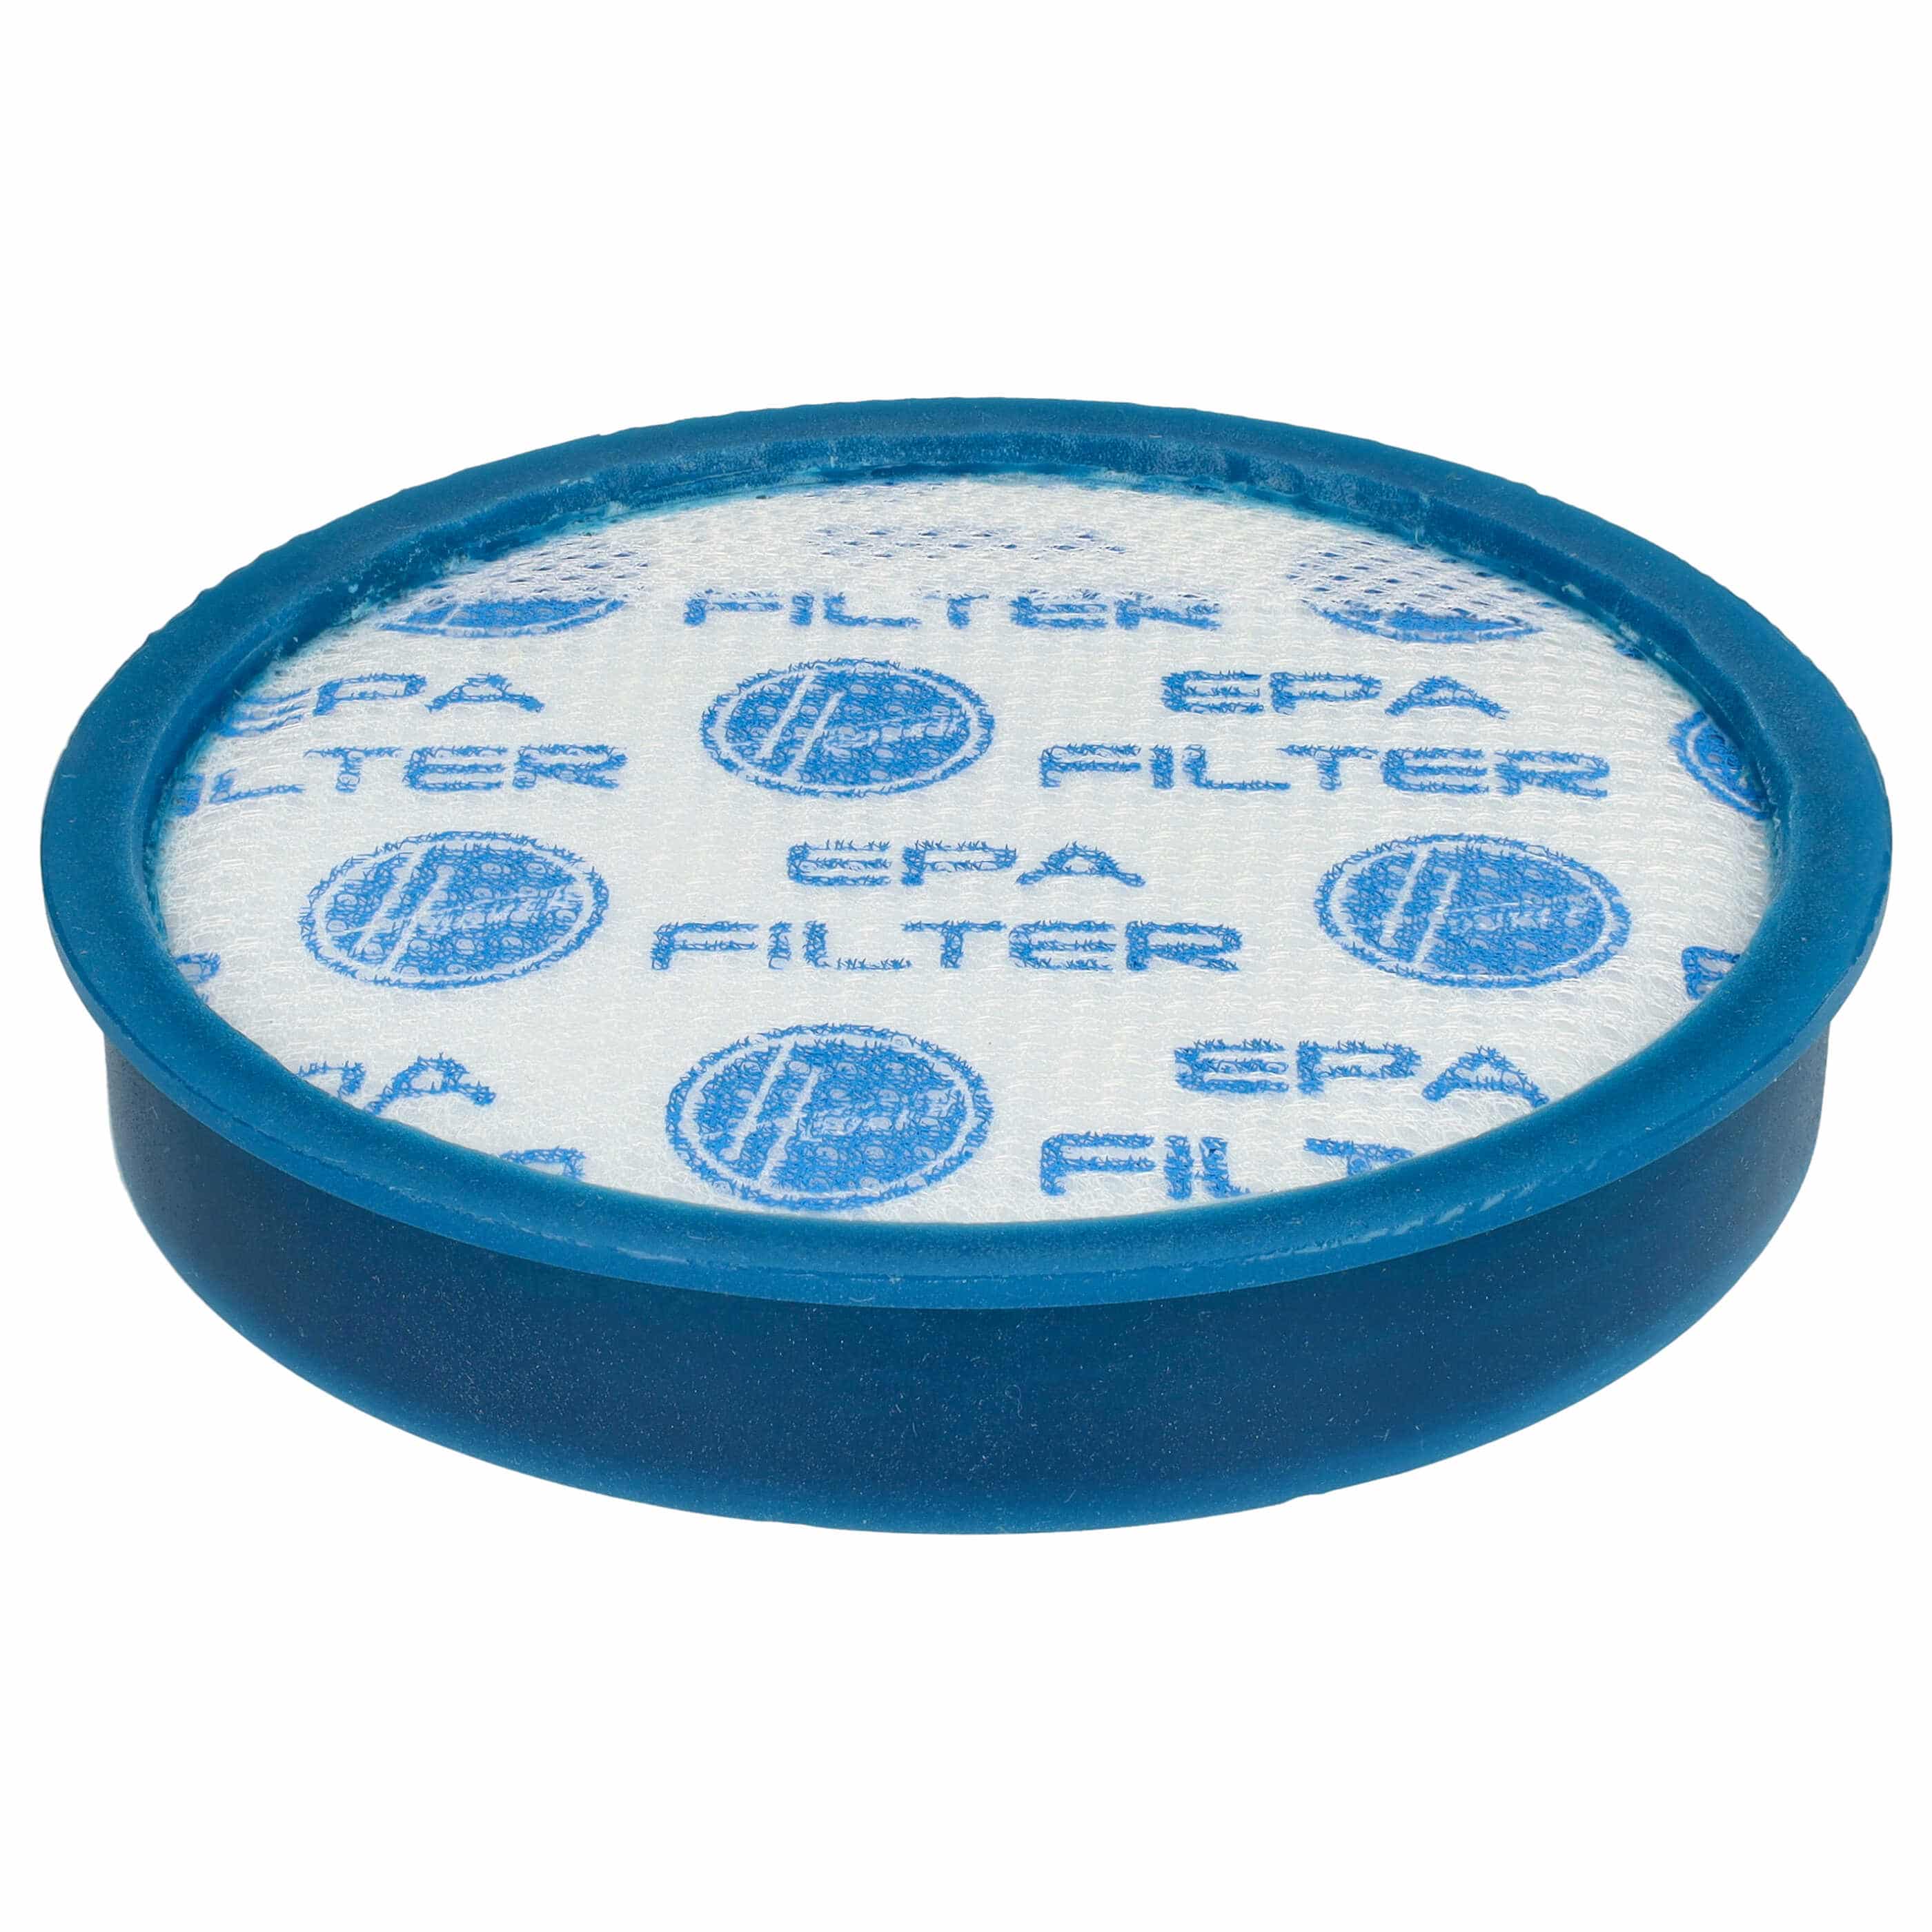 Filtr do odkurzacza Hoover zamiennik Hoover S115, 35601325 - filtr wstępny HEPA